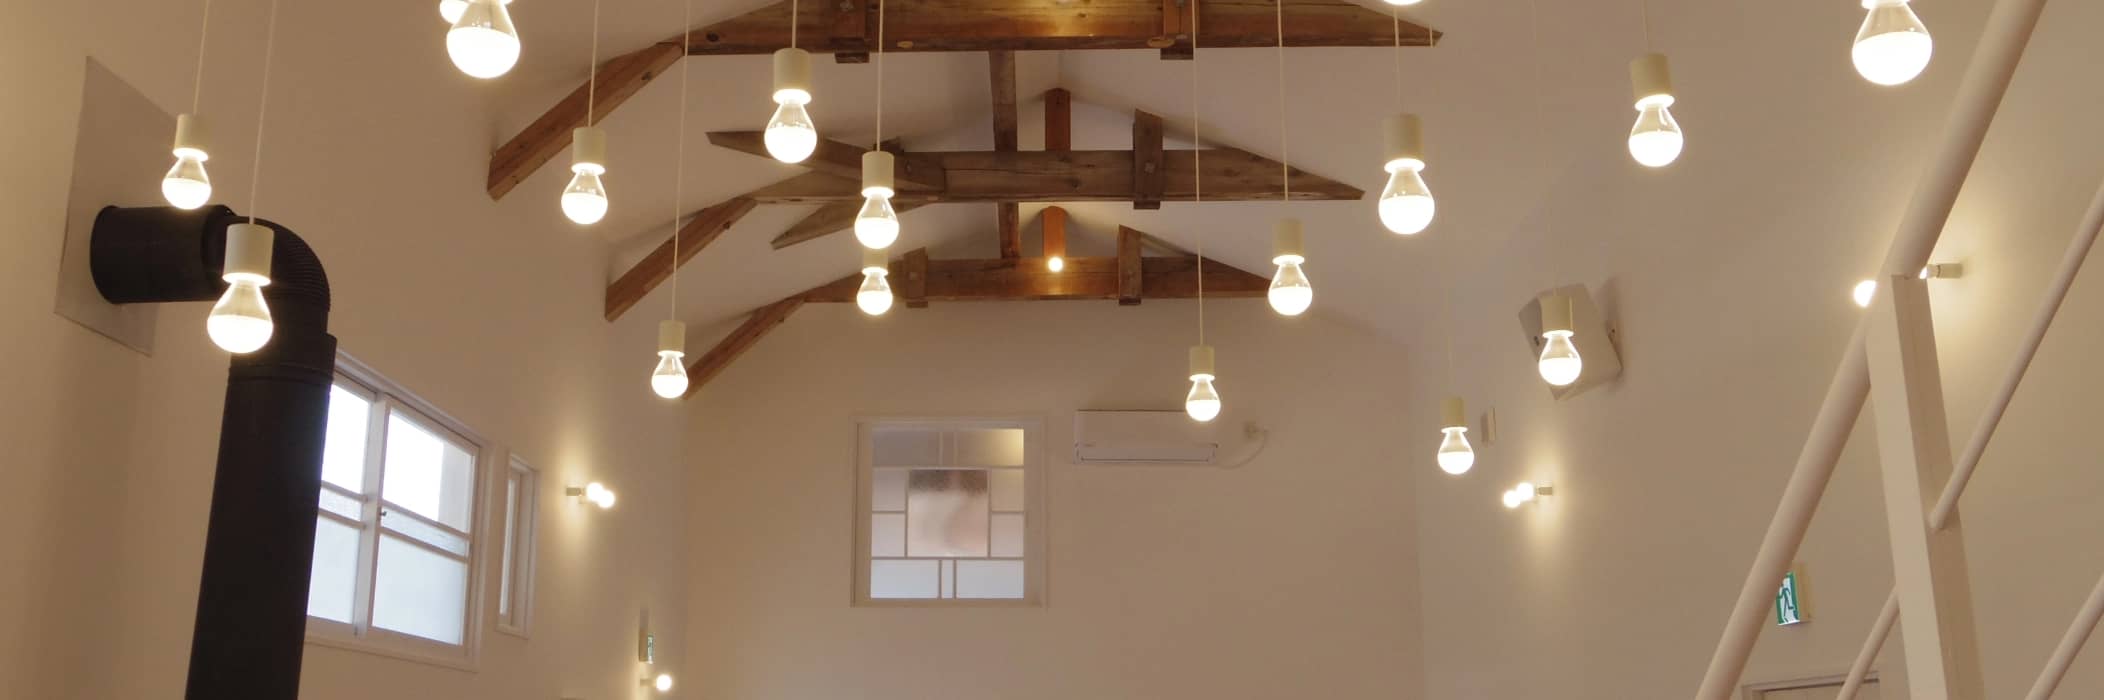 Cafe Kiridas白い内装の中天井にある多数の電球